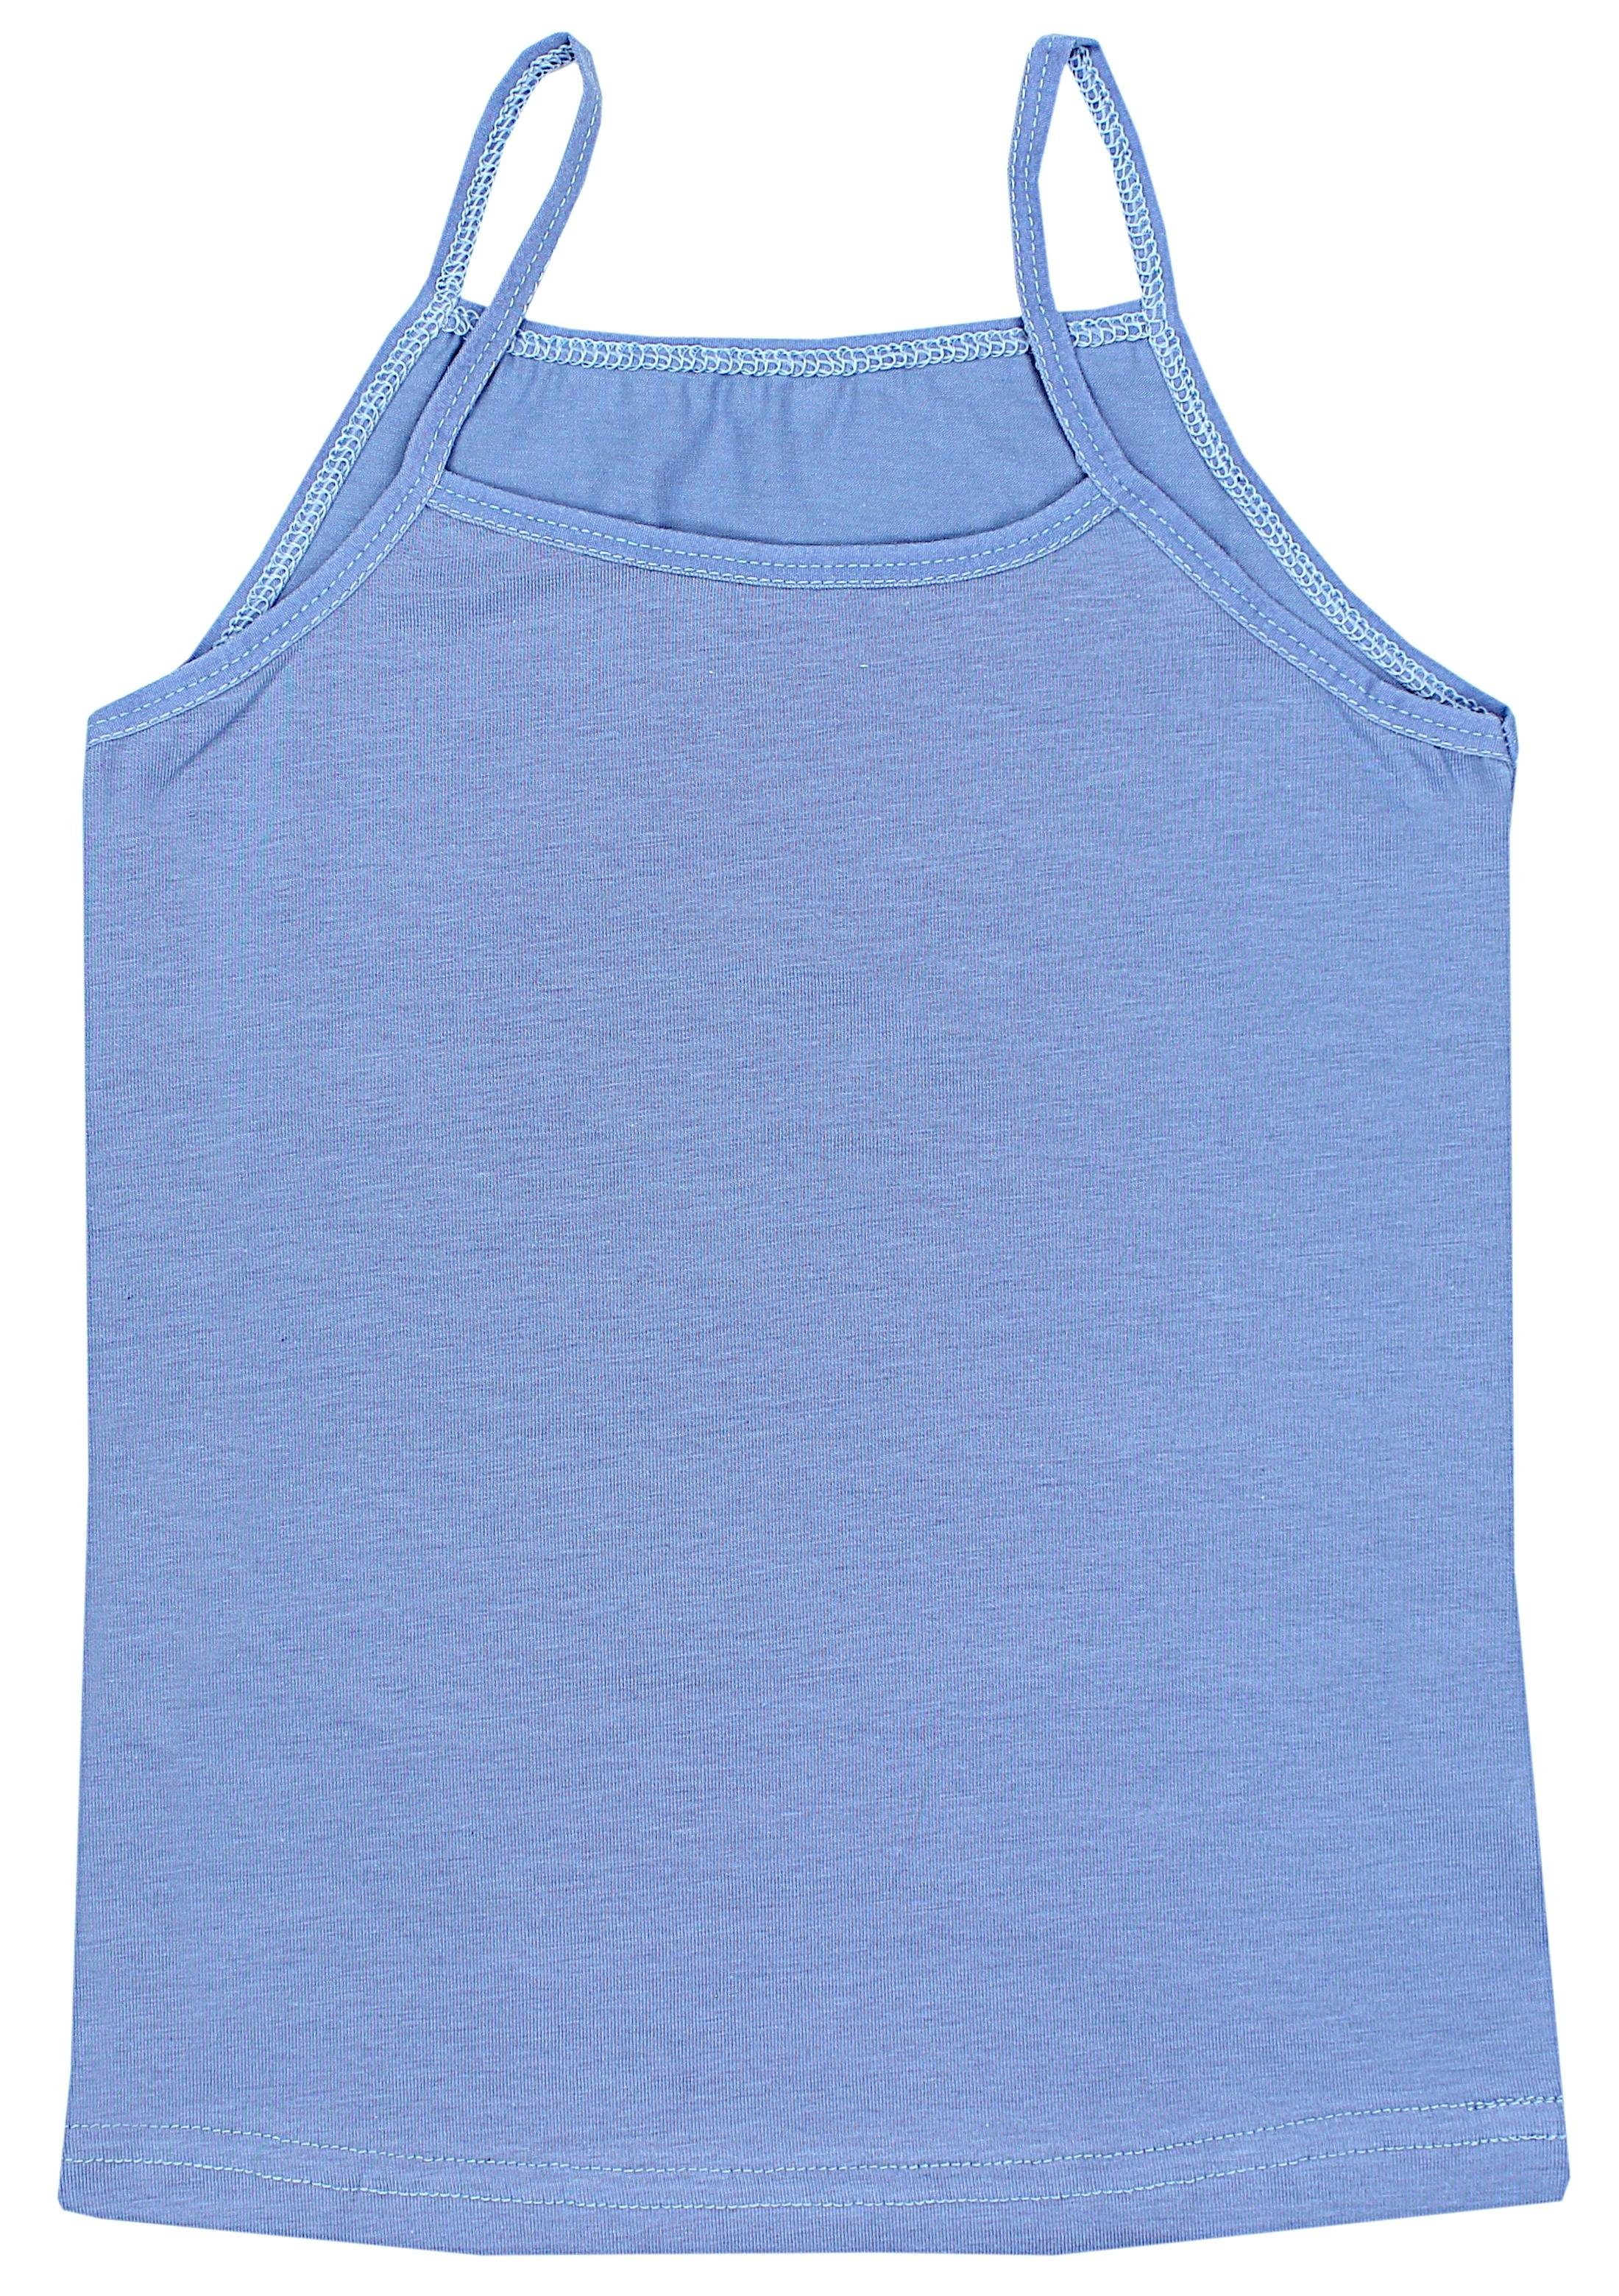 Mädchen Blau Hellblau Top TupTam Unterhemd Unterhemd Rosa Pack 5er Dunkelblau TupTam Grau Spaghettiträger